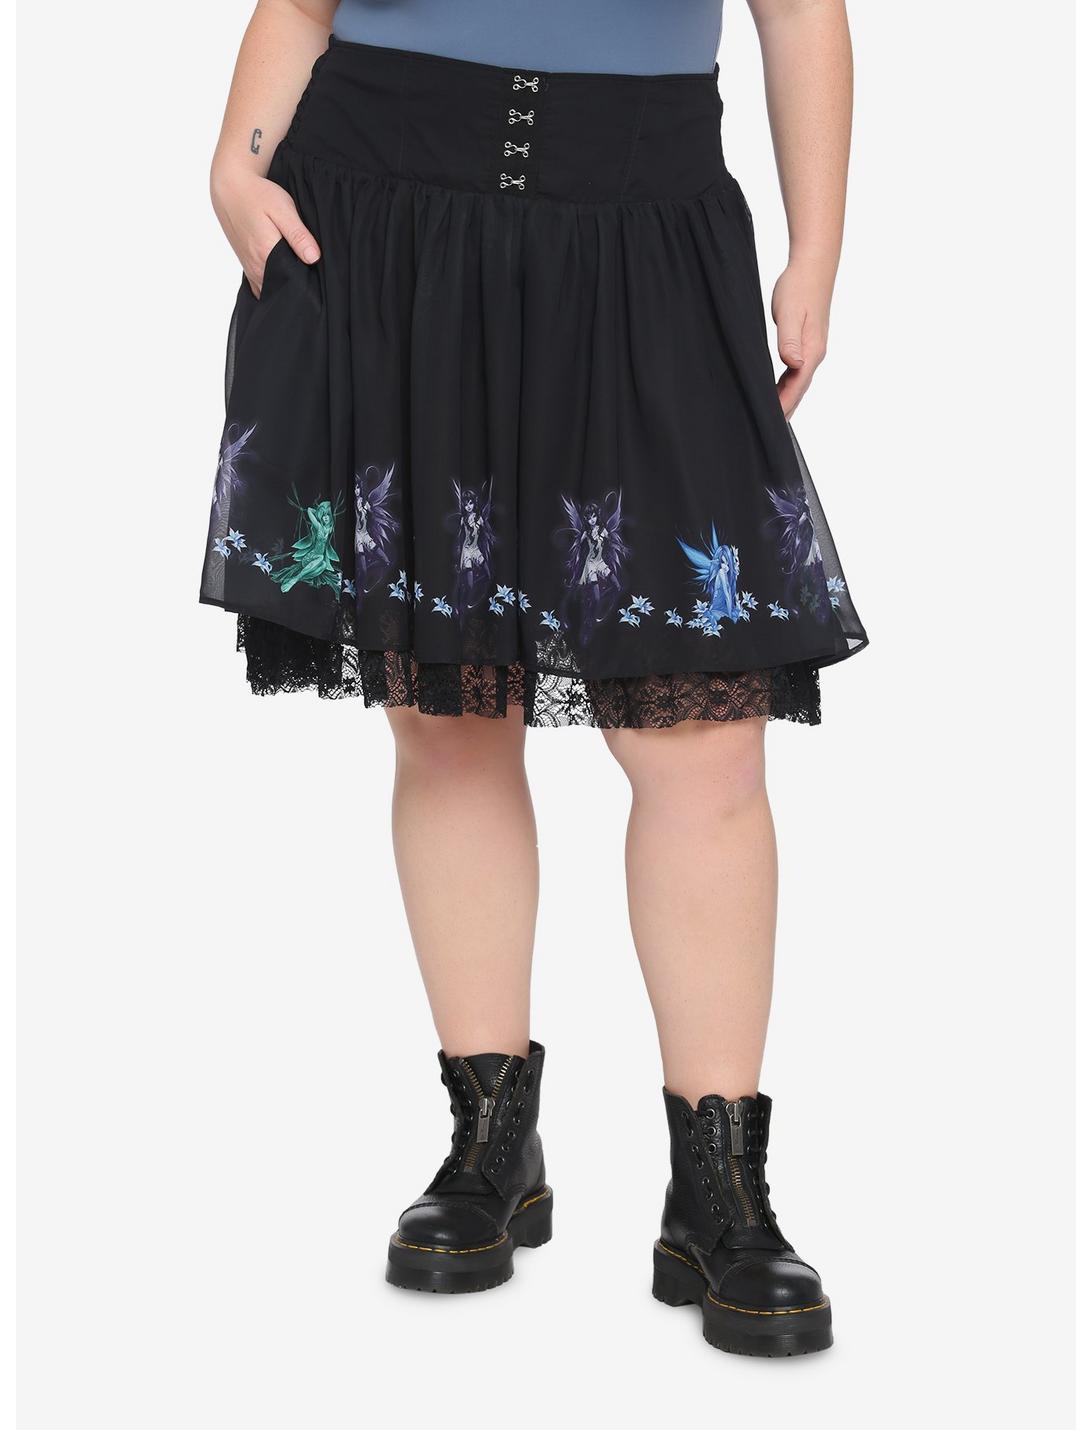 Fairies By Trick Lace Skirt Plus Size, MULTI, hi-res